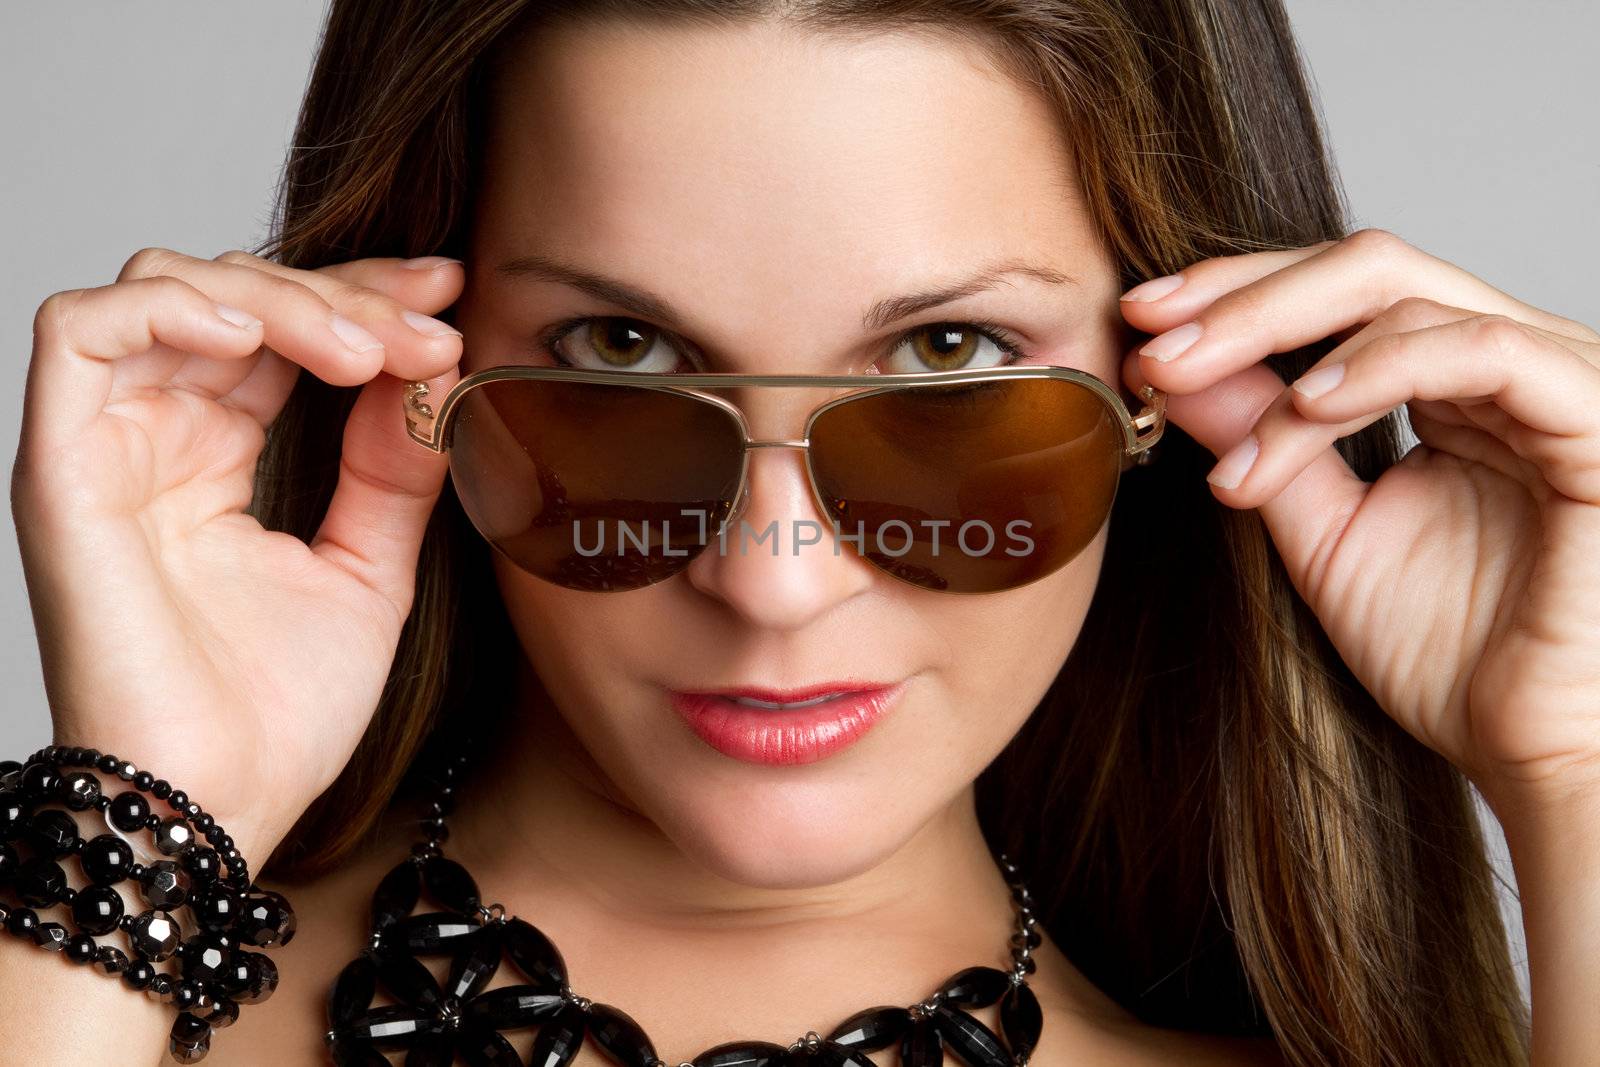 Sunglasses Woman by keeweeboy